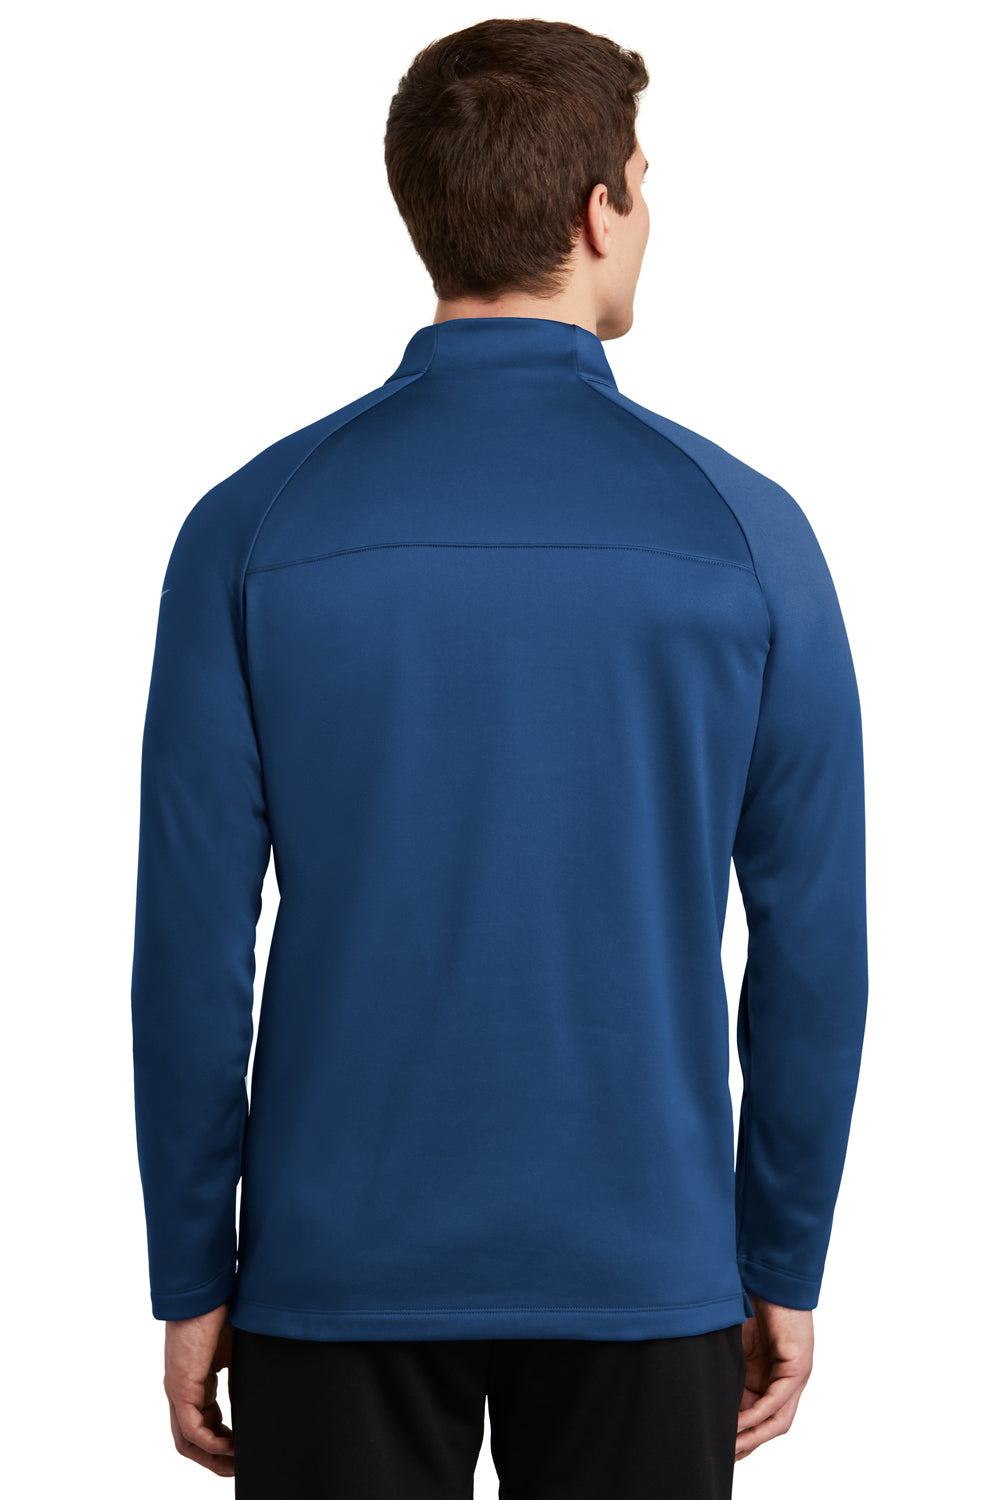 Nike NKAH6254 Mens Therma-Fit Moisture Wicking Fleece 1/4 Zip Sweatshirt Gym Blue Model Back